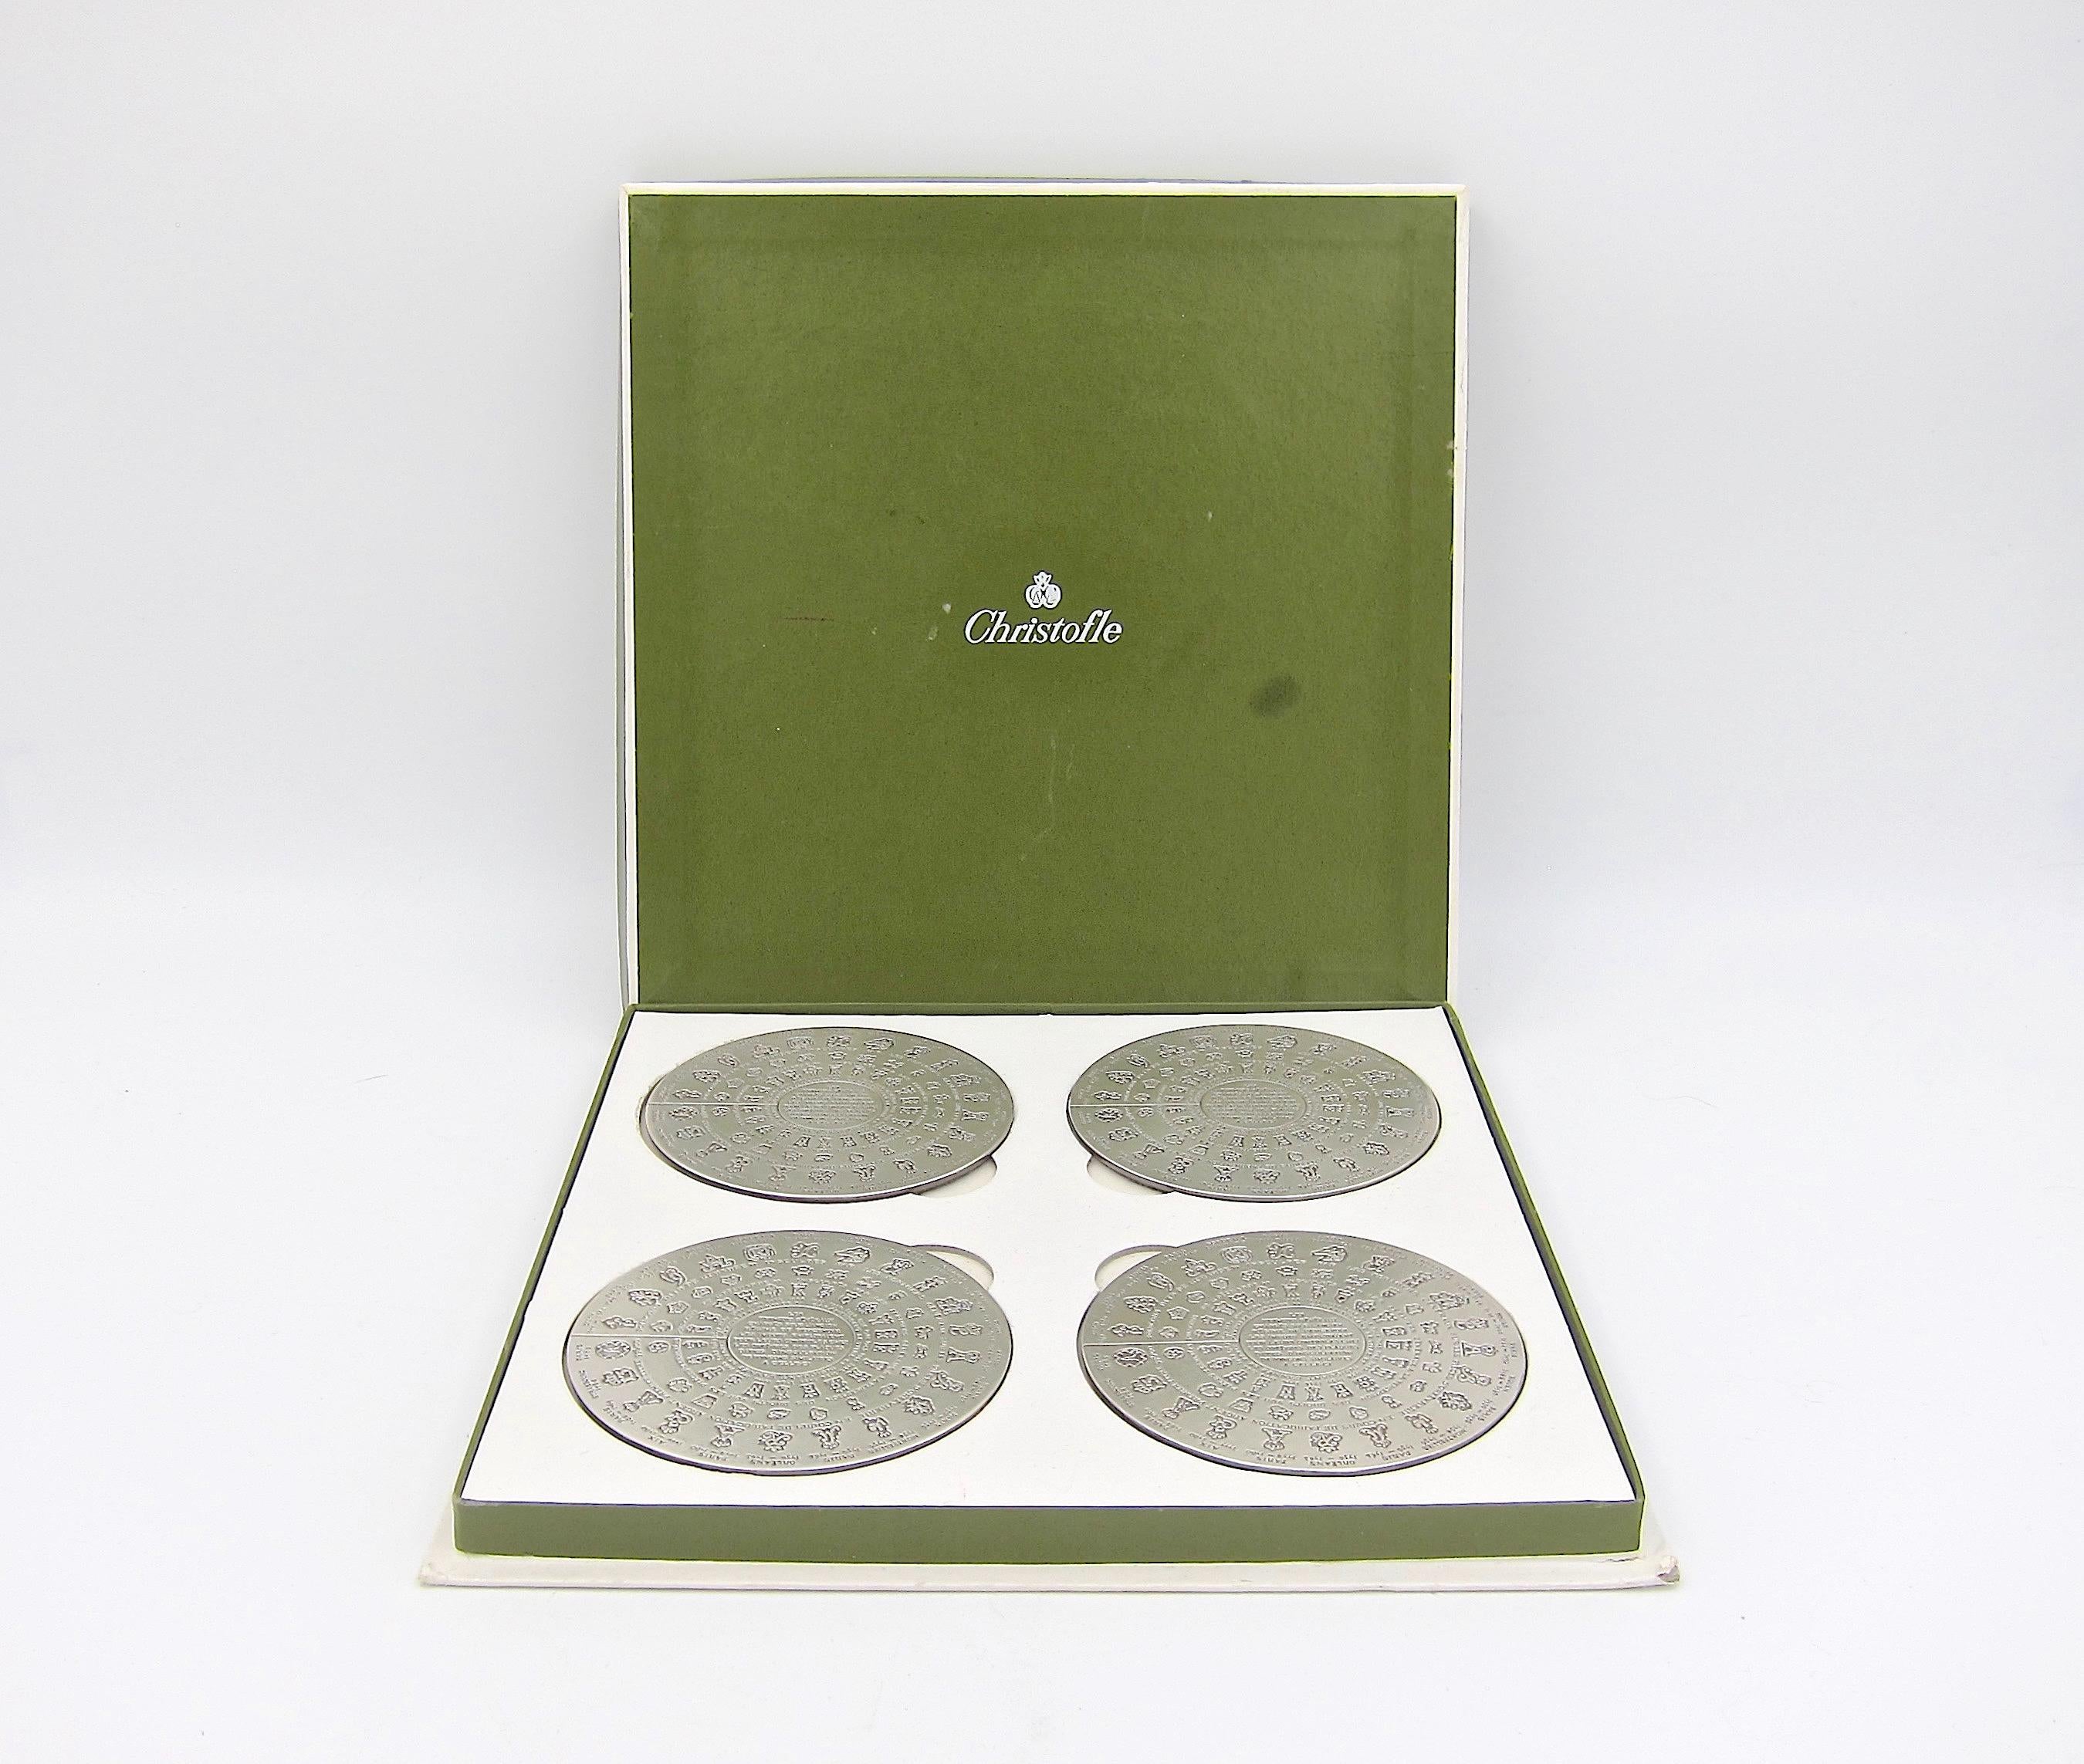 Christofle Fermiers Generaux Set of Four Vintage Coasters with Original Box 4